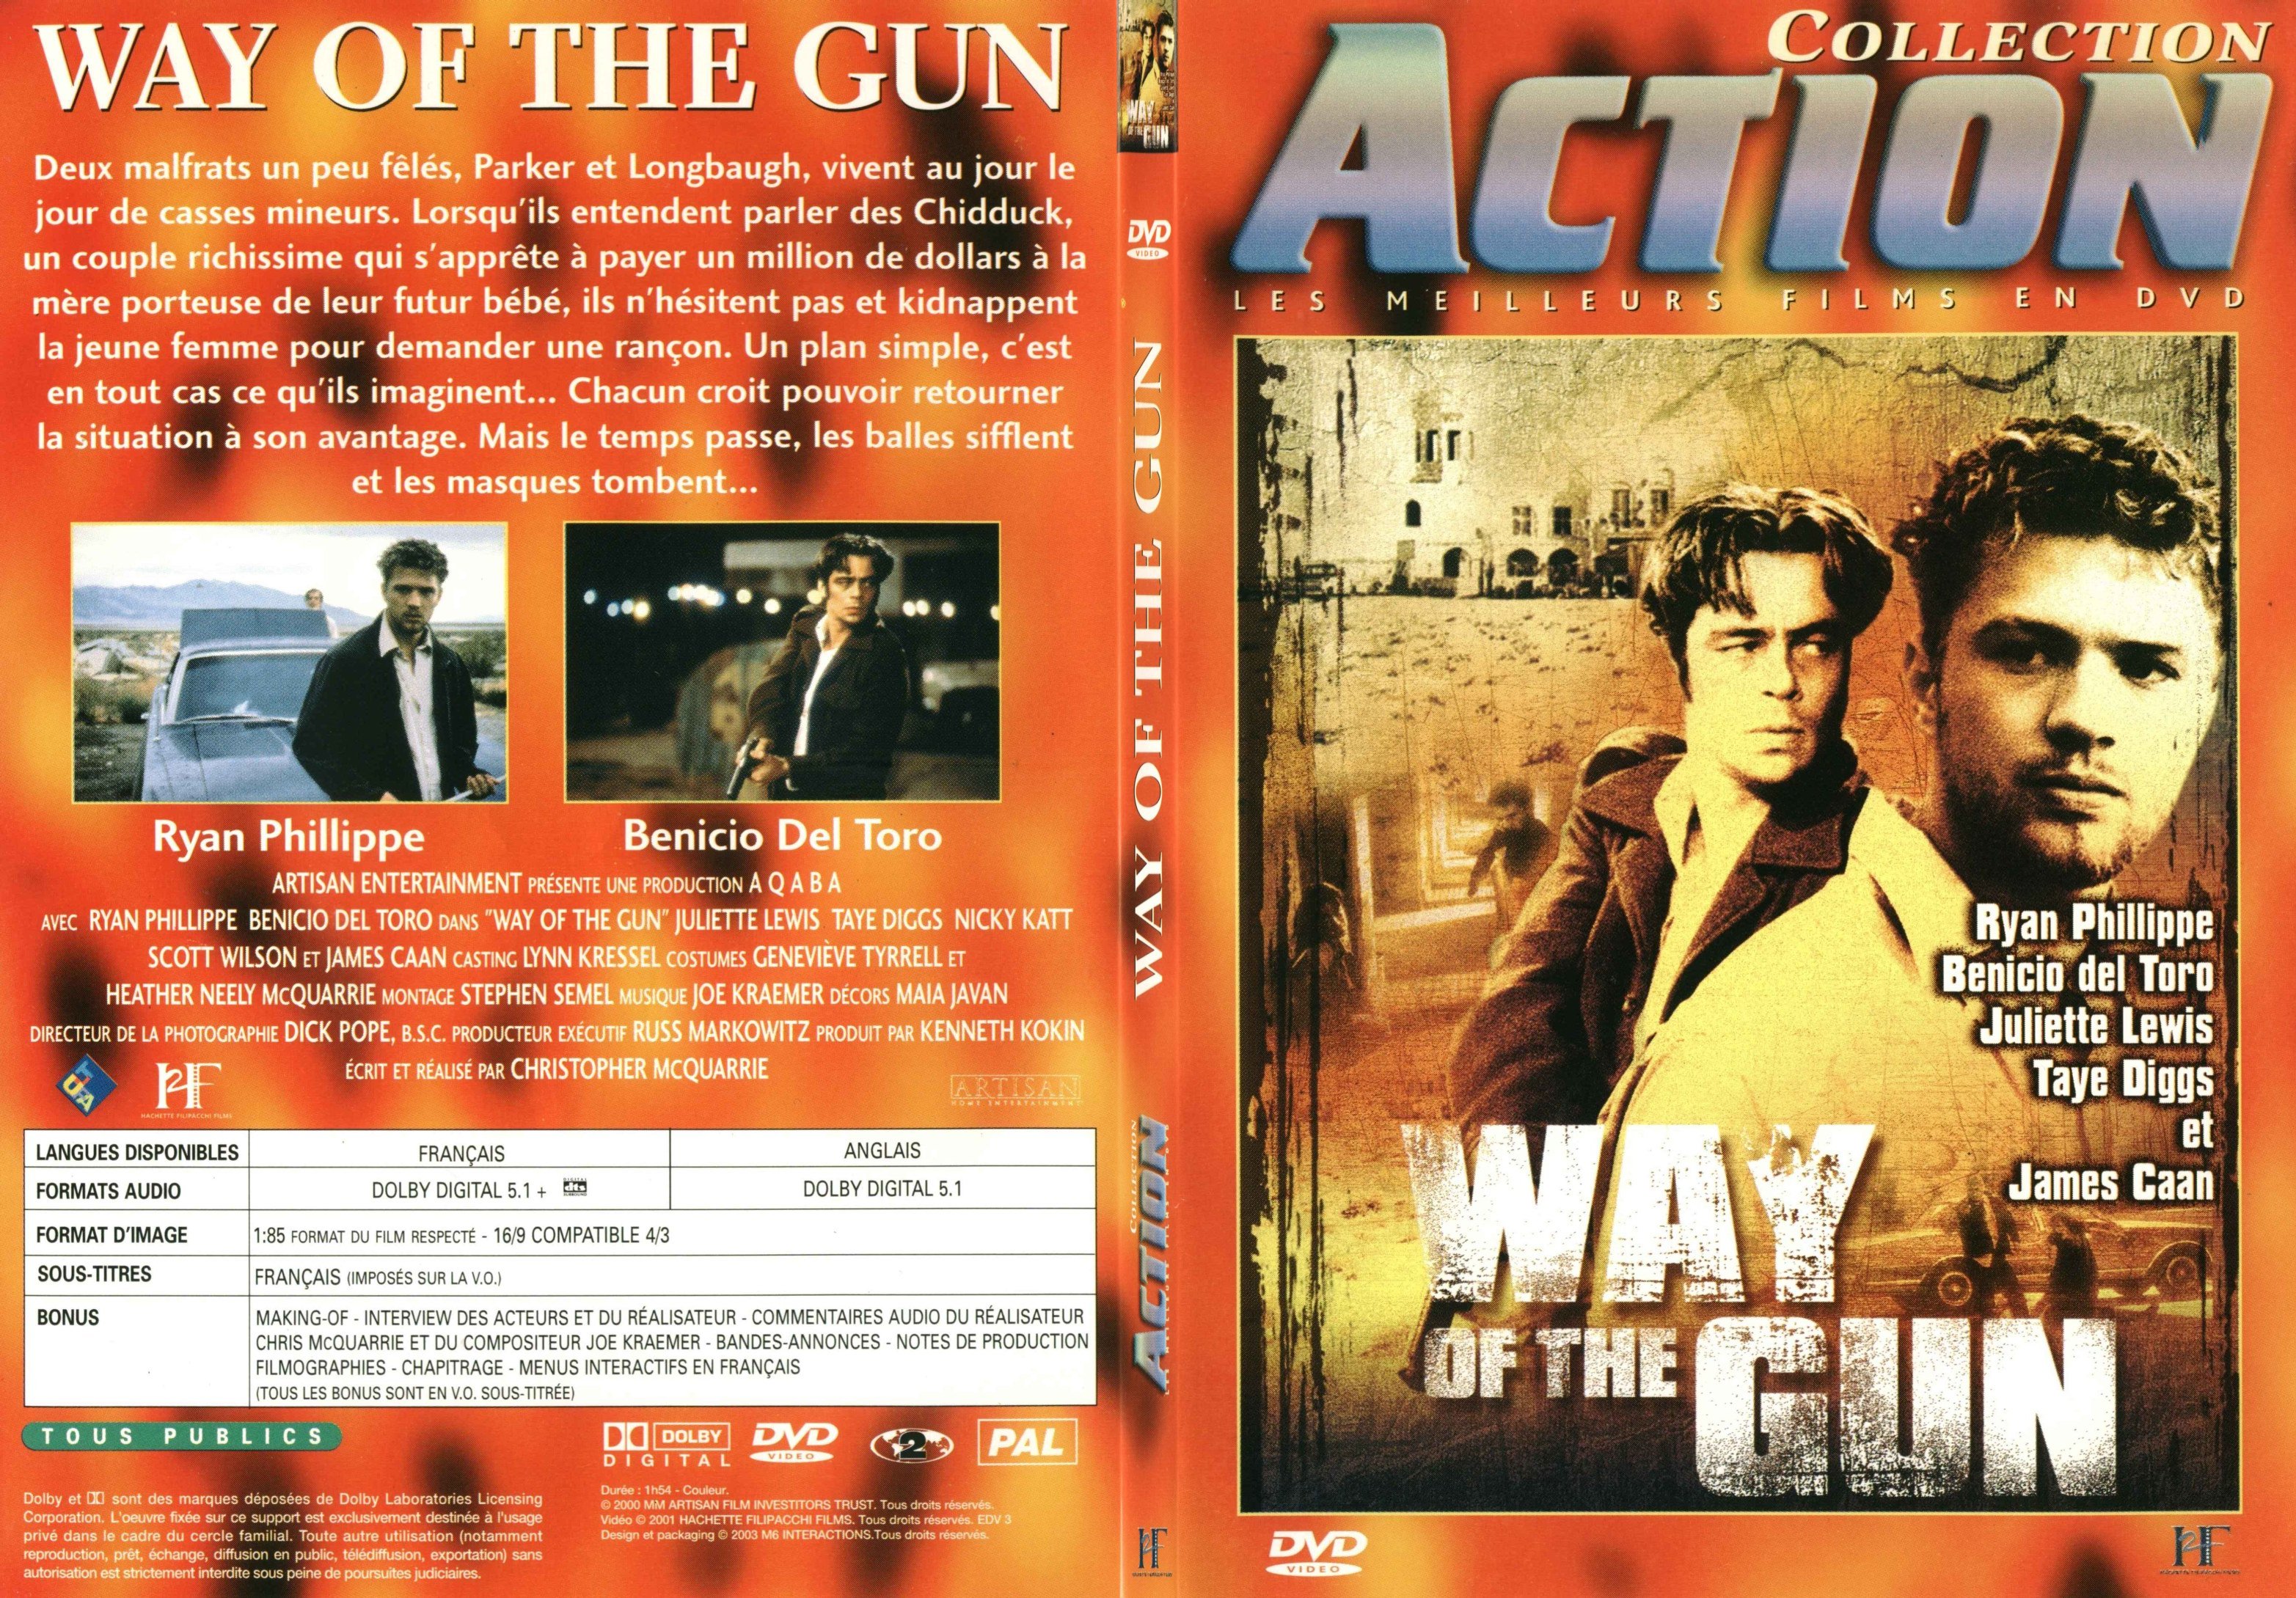 Jaquette DVD Way of the gun - SLIM